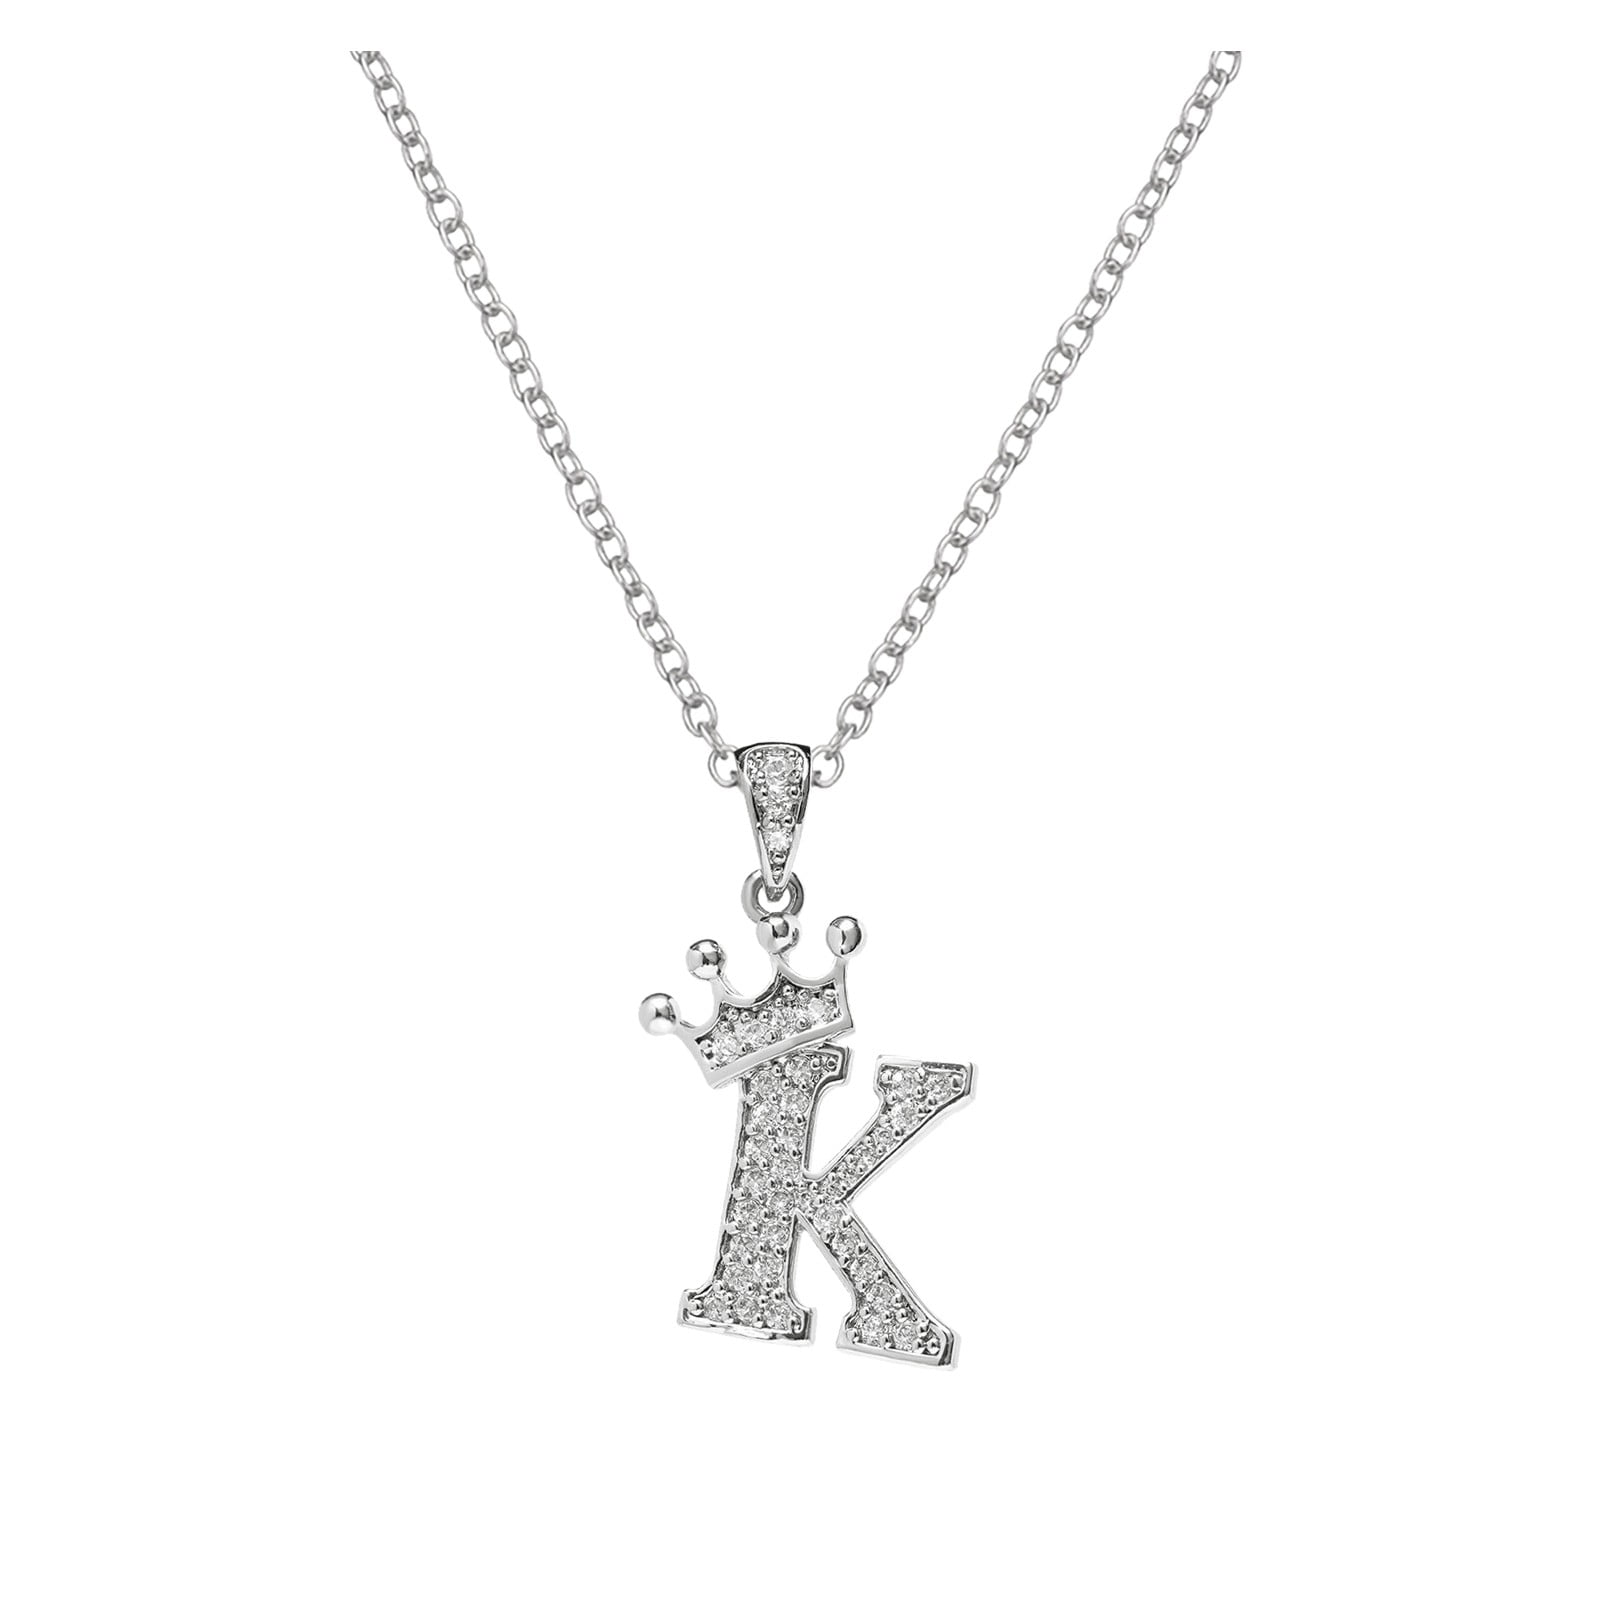 Rhinestone Letter Alphabet Jewelry Charm